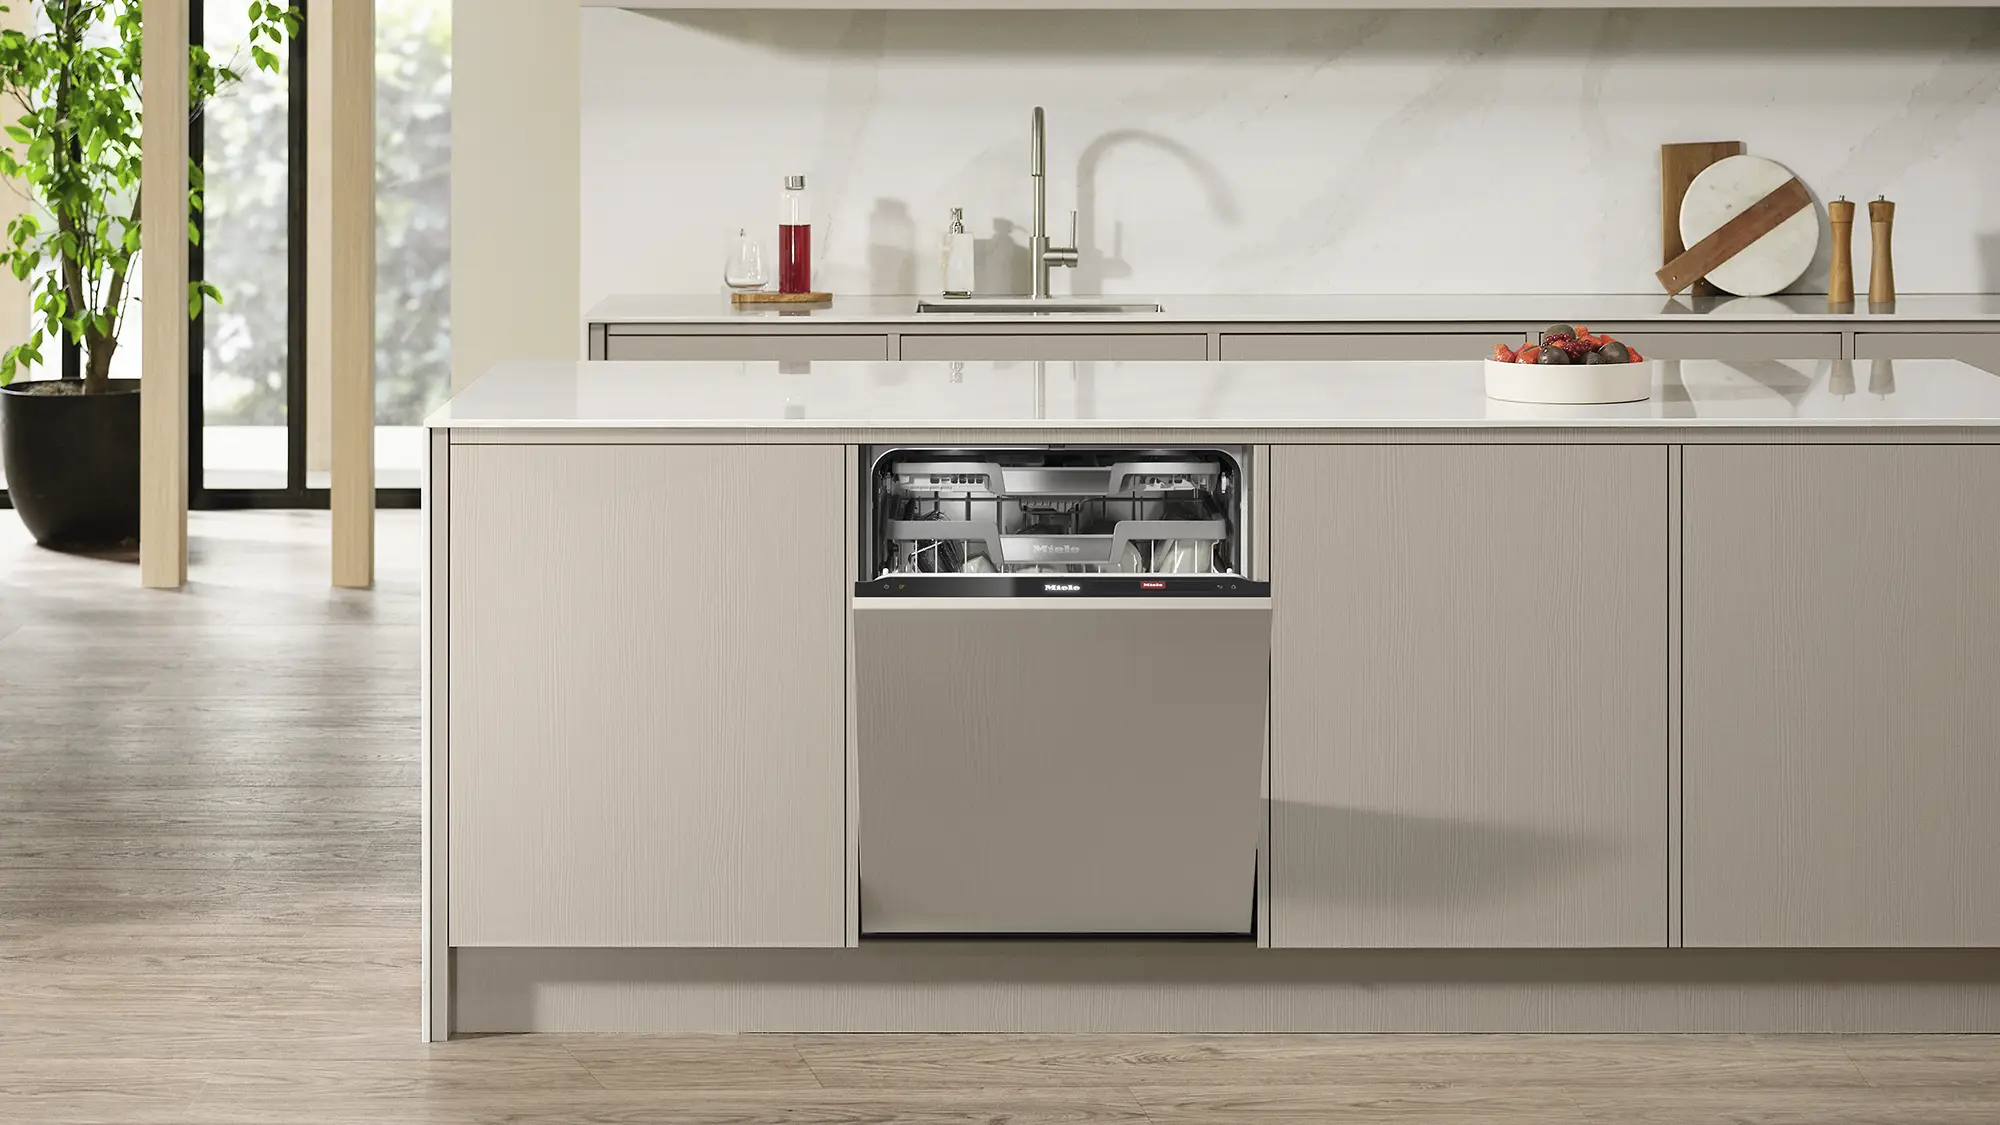 Fully integrated G 7000 dishwasher